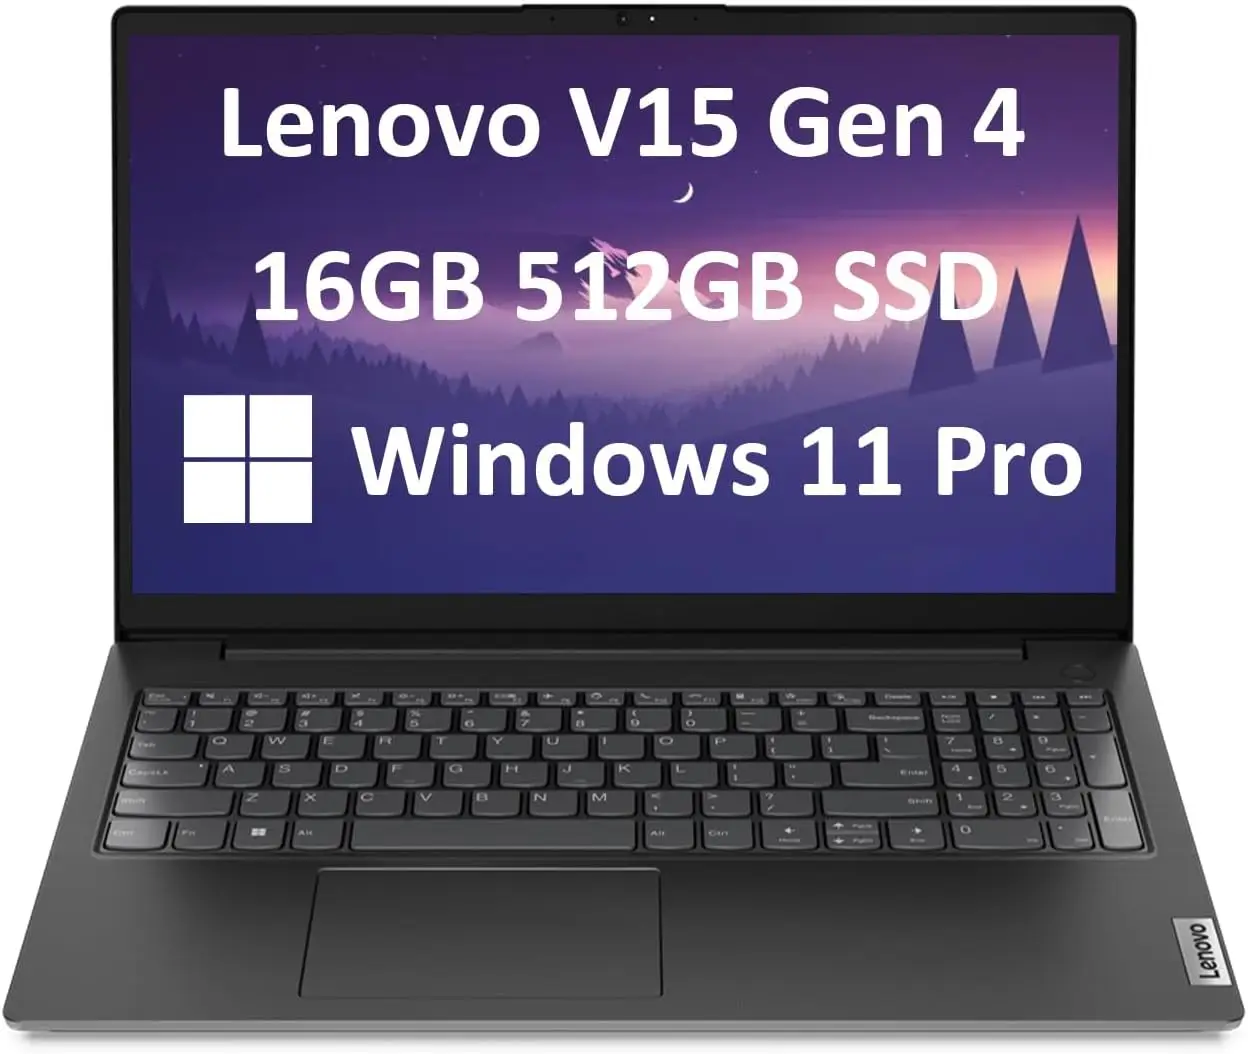 Lenovo Laptop V15 for Business (15.6" FHD, AMD 6-Core Ryzen 5 5500U (Beat i7-1065G7), 16GB RAM, 512GB SSD), Webcam w/ Shutter, Military Grade, Numeric Keypad, Type-C, Ethernet, Wi-Fi, Win 11 Pro